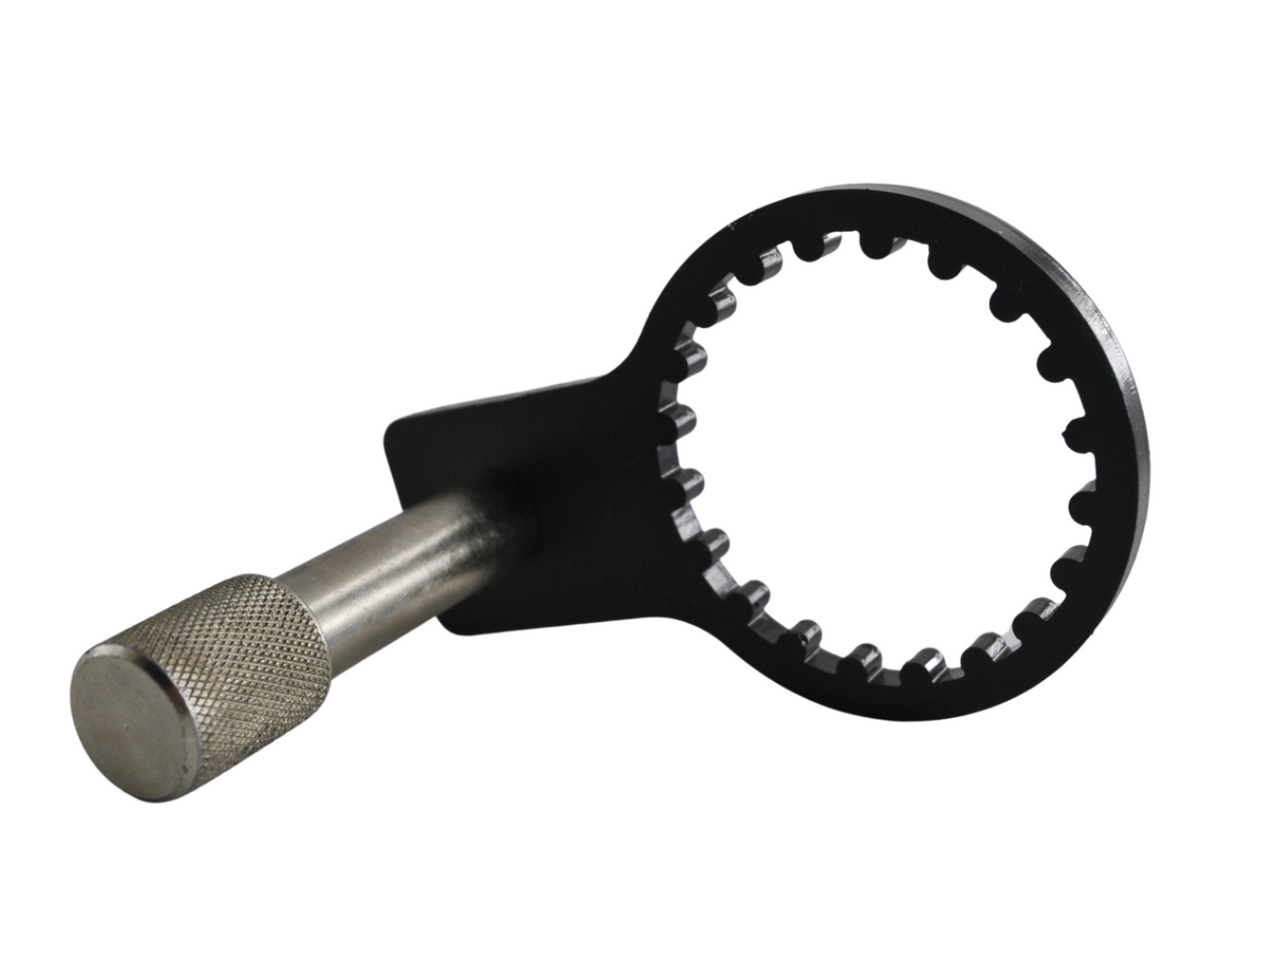 Ducati Timing Belt Roller Locking Tool Part No. 88713.2355